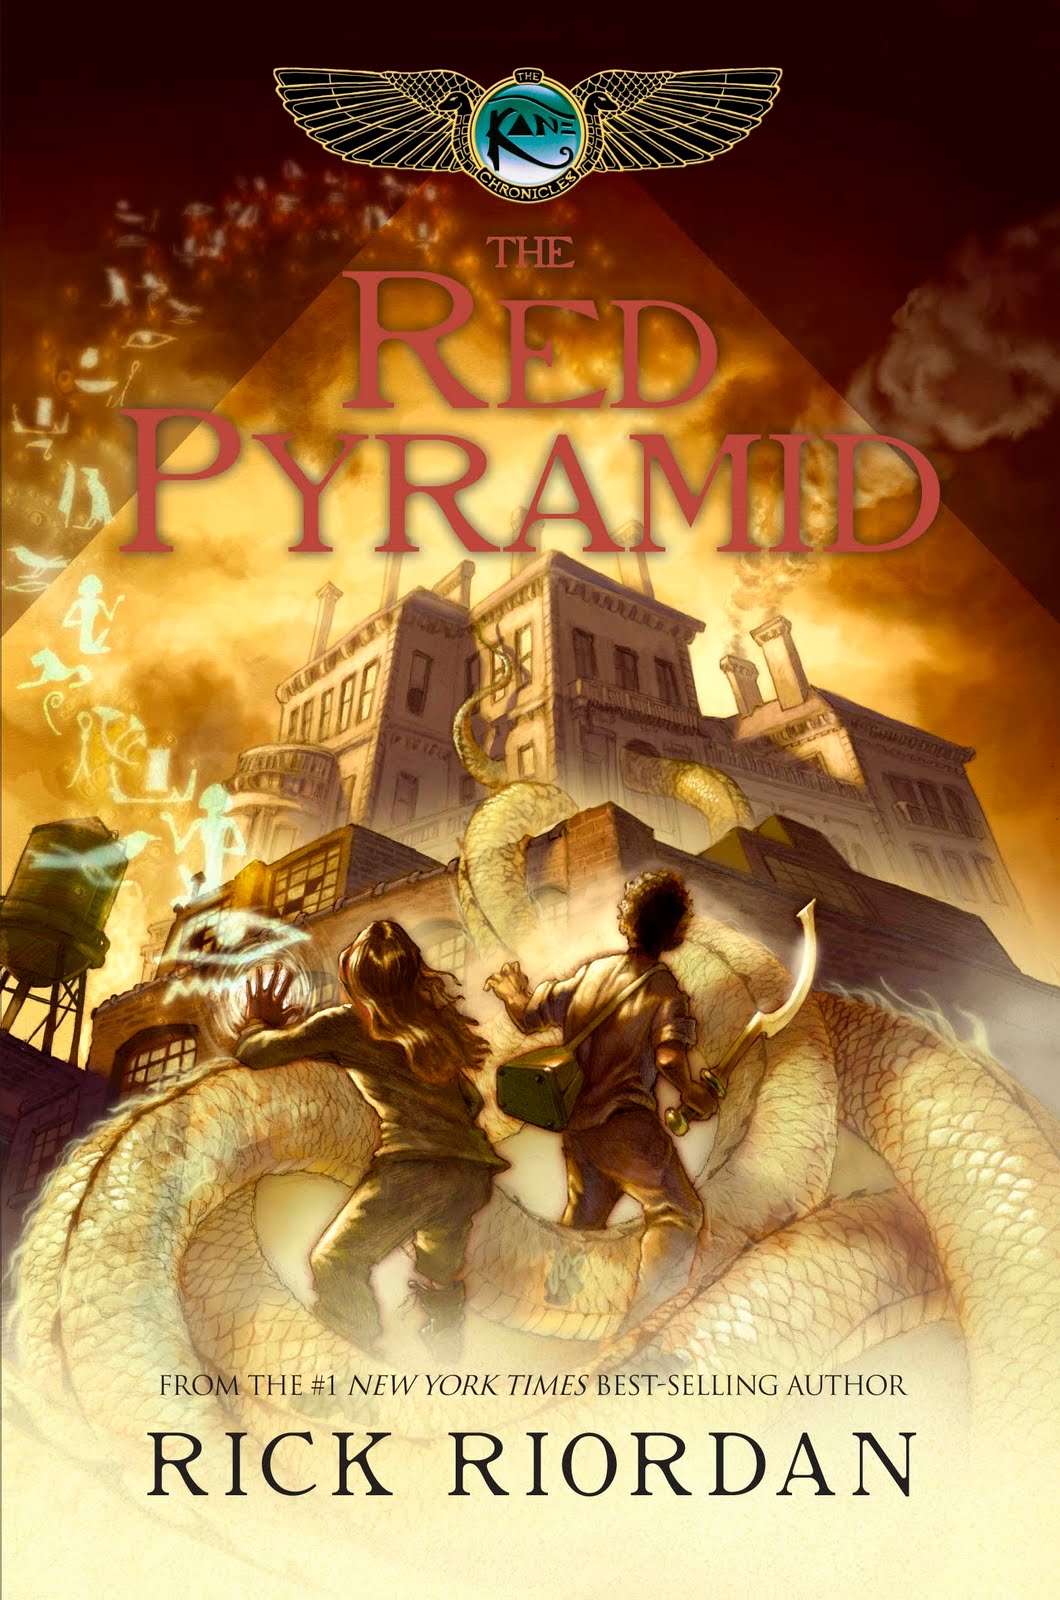 [Riordan_Red+pyramid.jpg]